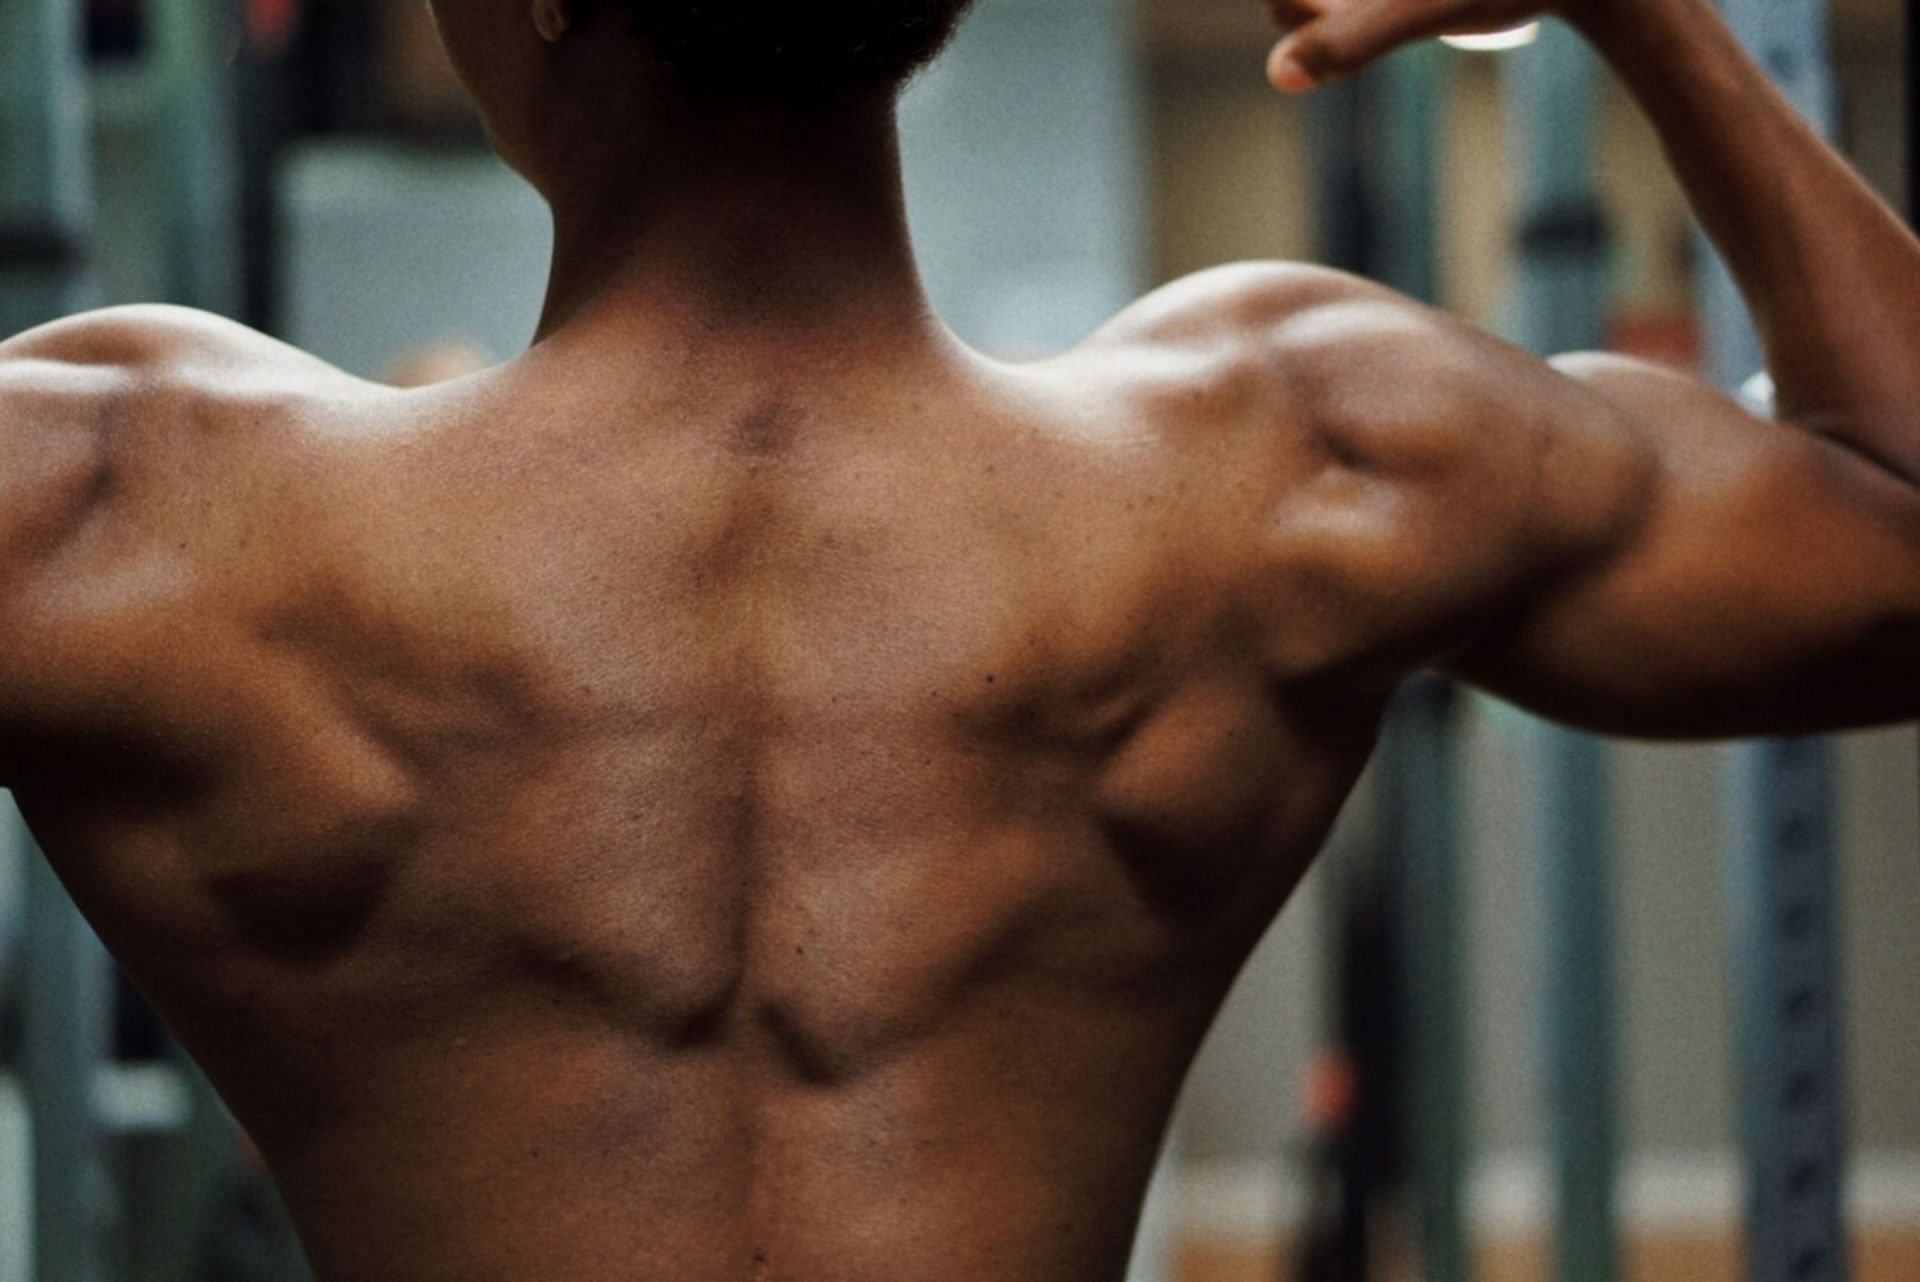 Shoulder training and development helps in building a strong rear delt muscle. (Image via Unsplash /Nigel Msipa)